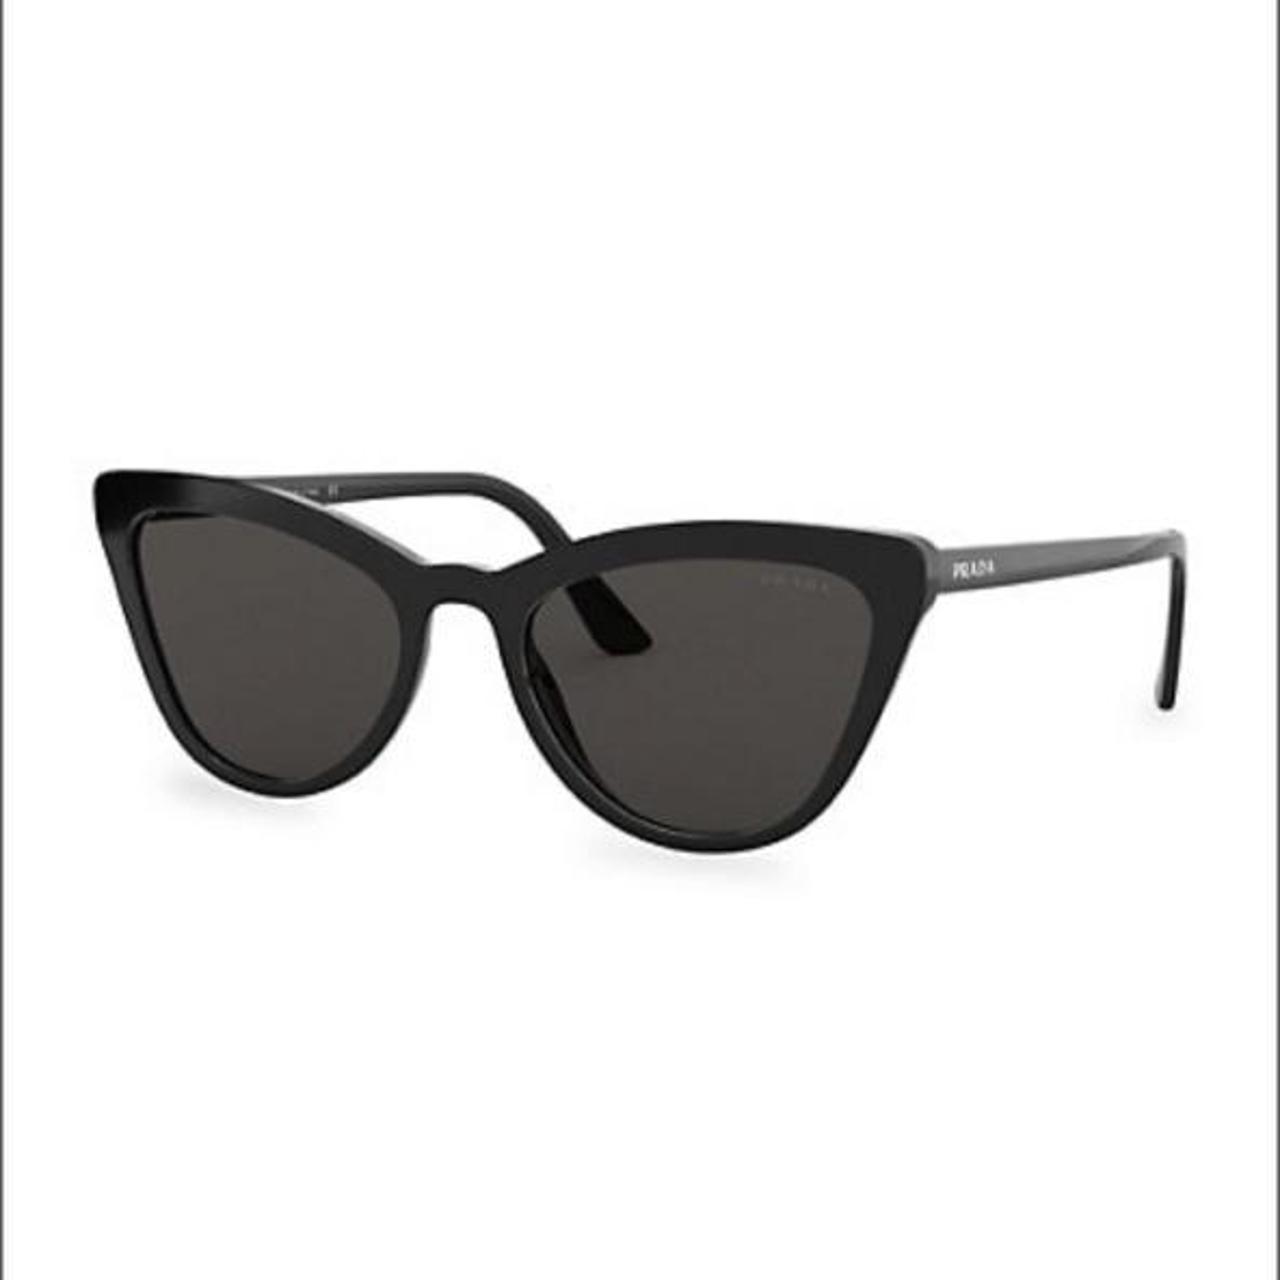 Product Image 1 - Prada cat eye sunglasses authentic